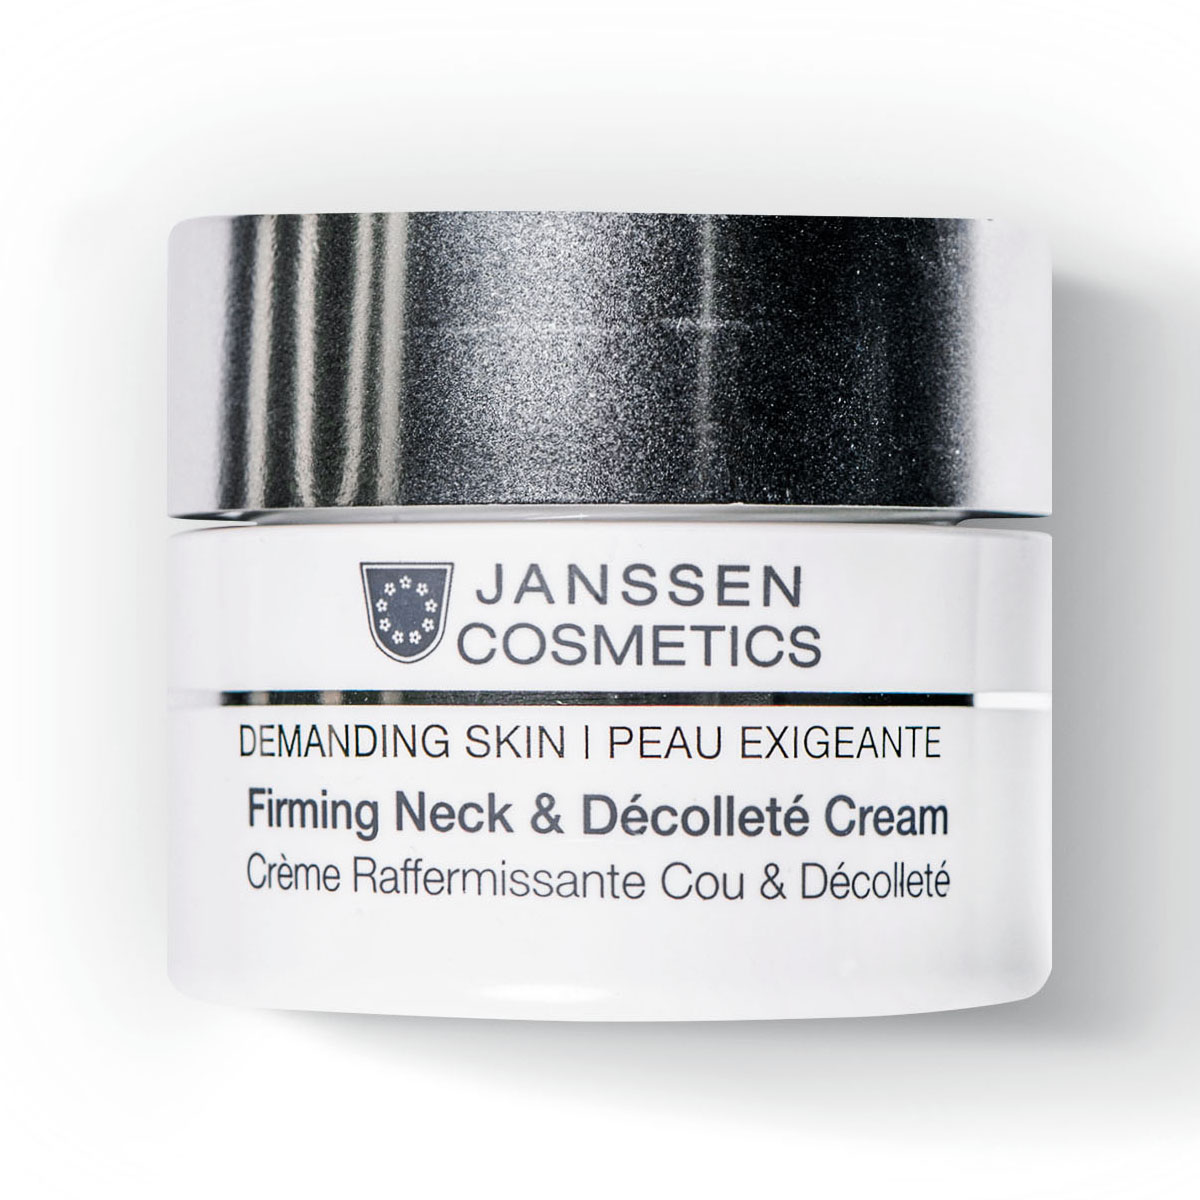 Janssen Cosmetics Крем для кожи лица, шеи и декольте Firming Face, Neck & Decollete Cream, 50 мл (Janssen Cosmetics, Demanding skin)